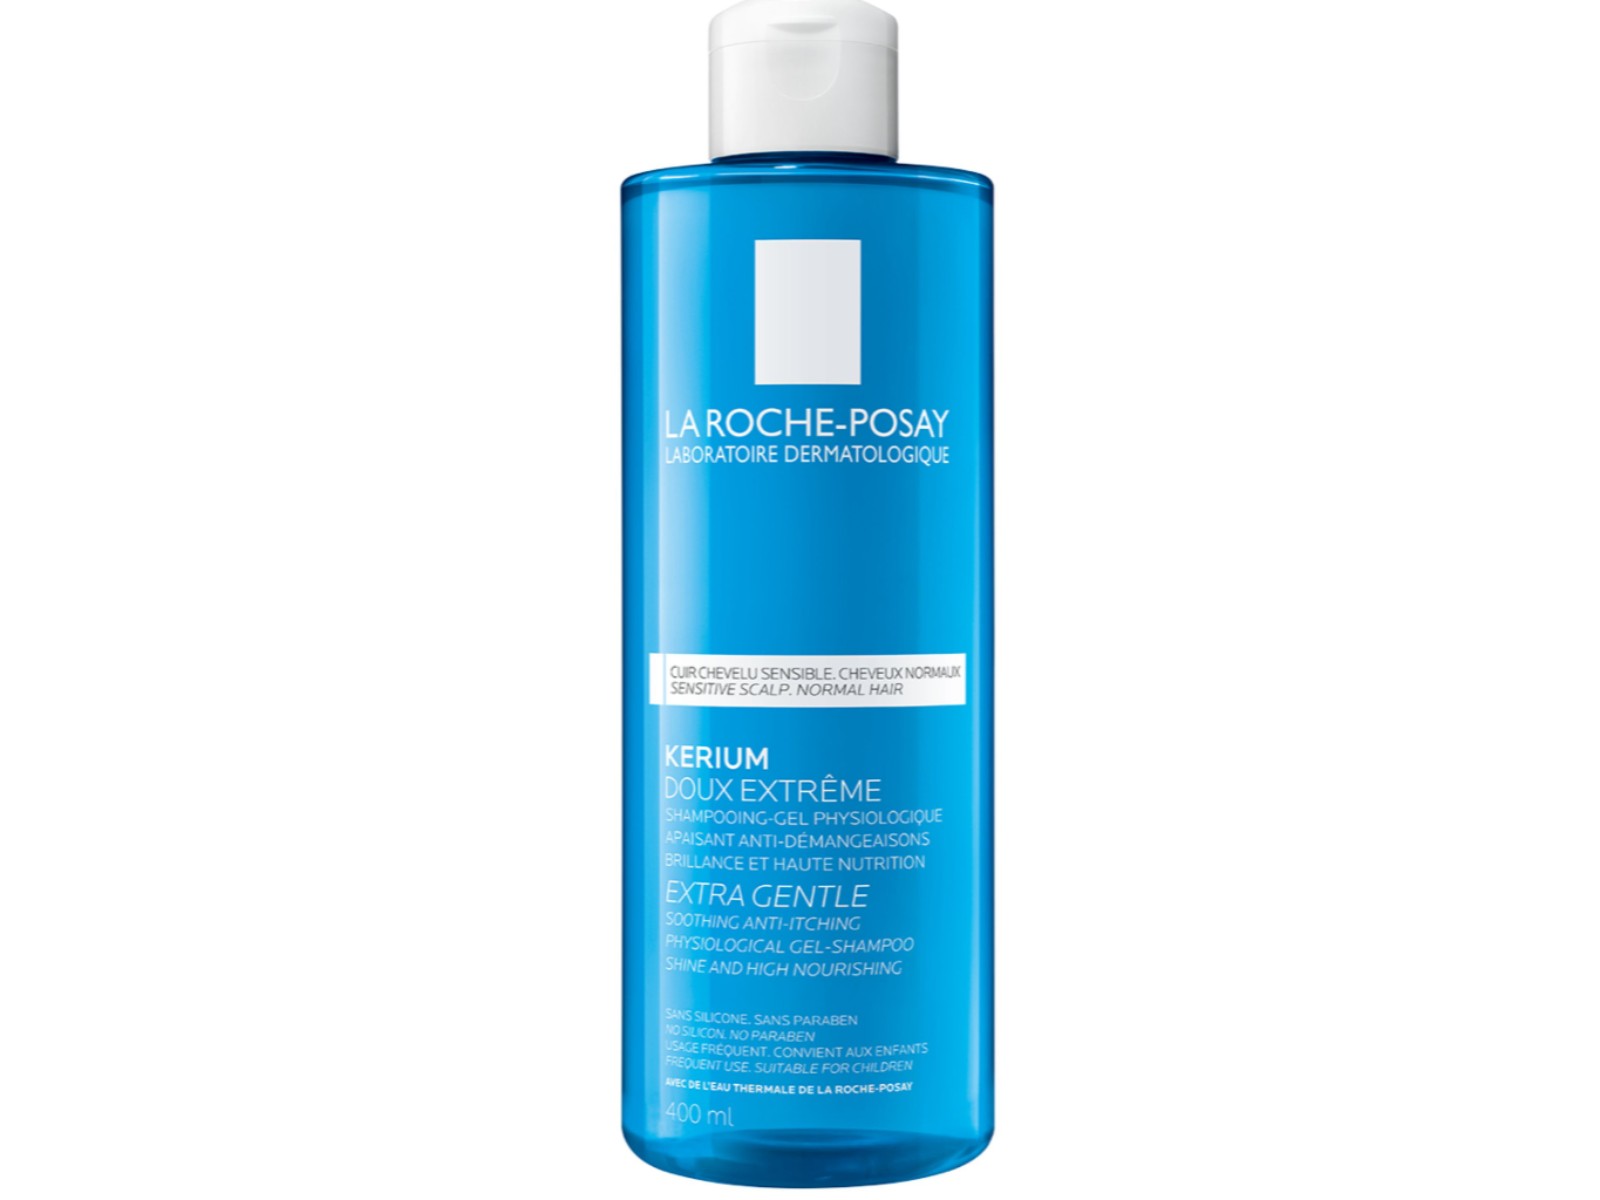 La Roche Posay Kerium Hairloss Shampoo